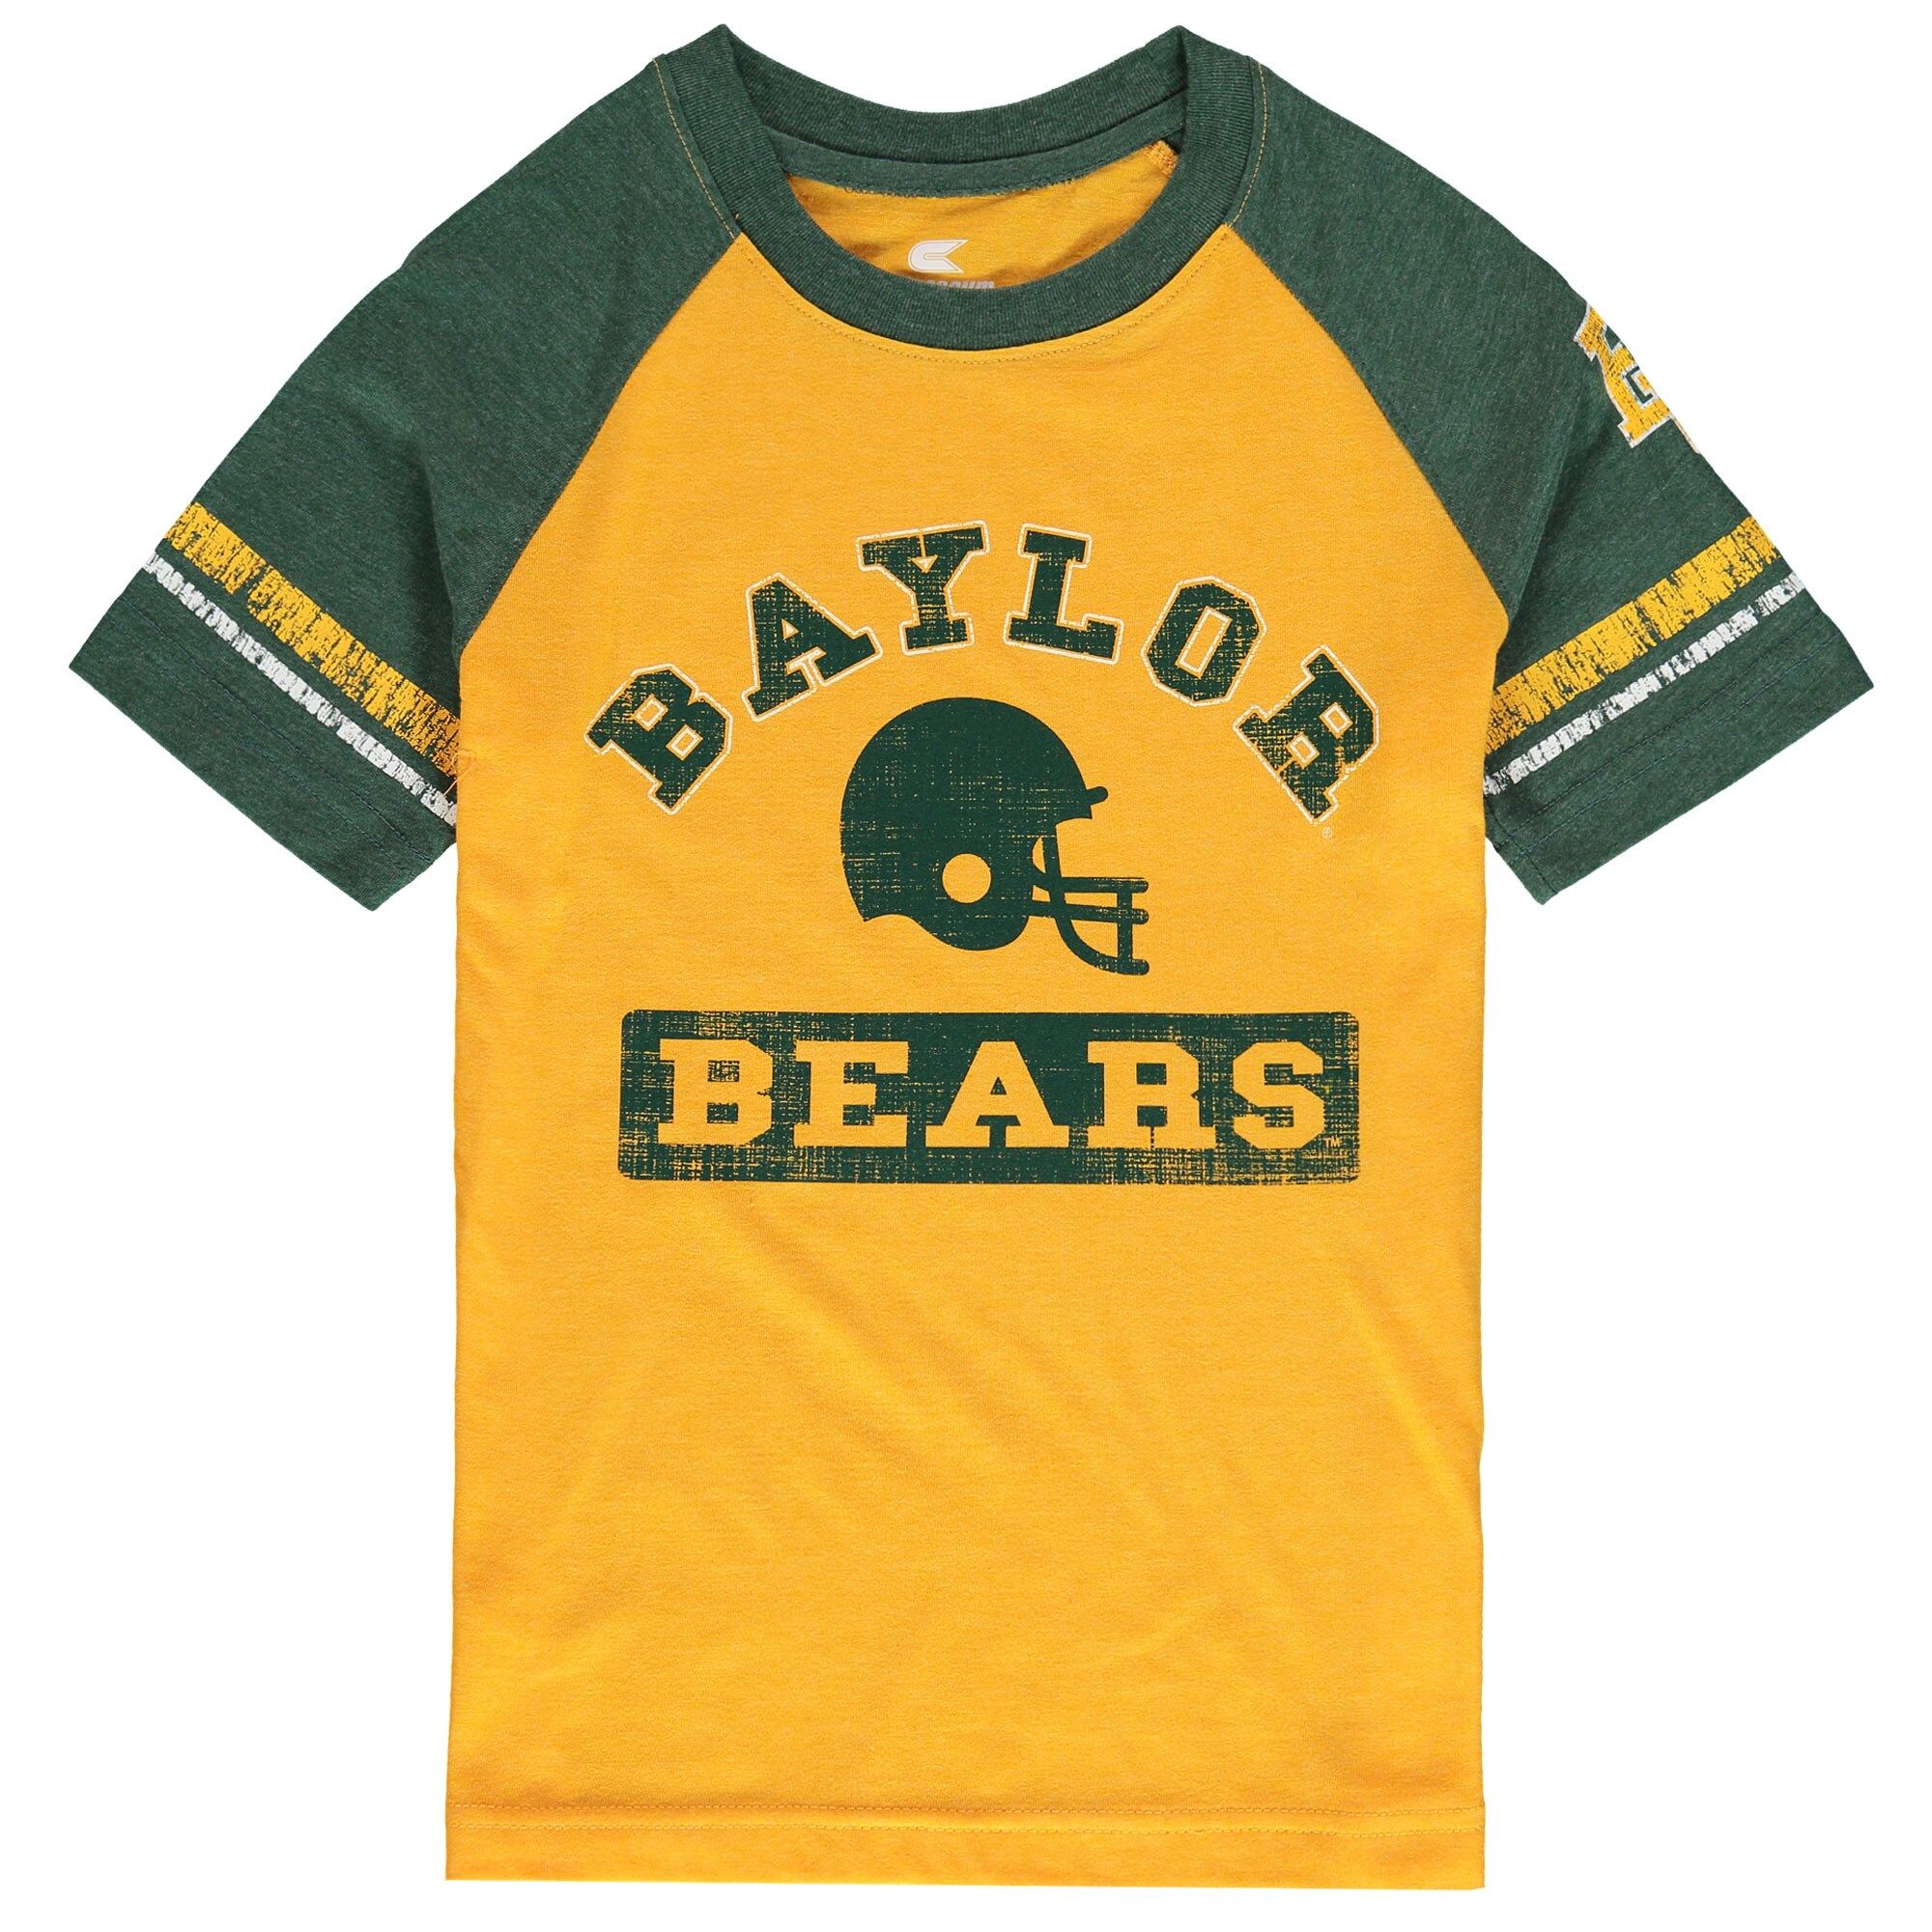 Baylor Bears Colosseum Youth All Pro Raglan Sleeve T-Shirt - Gold/Green | Fanatics.com